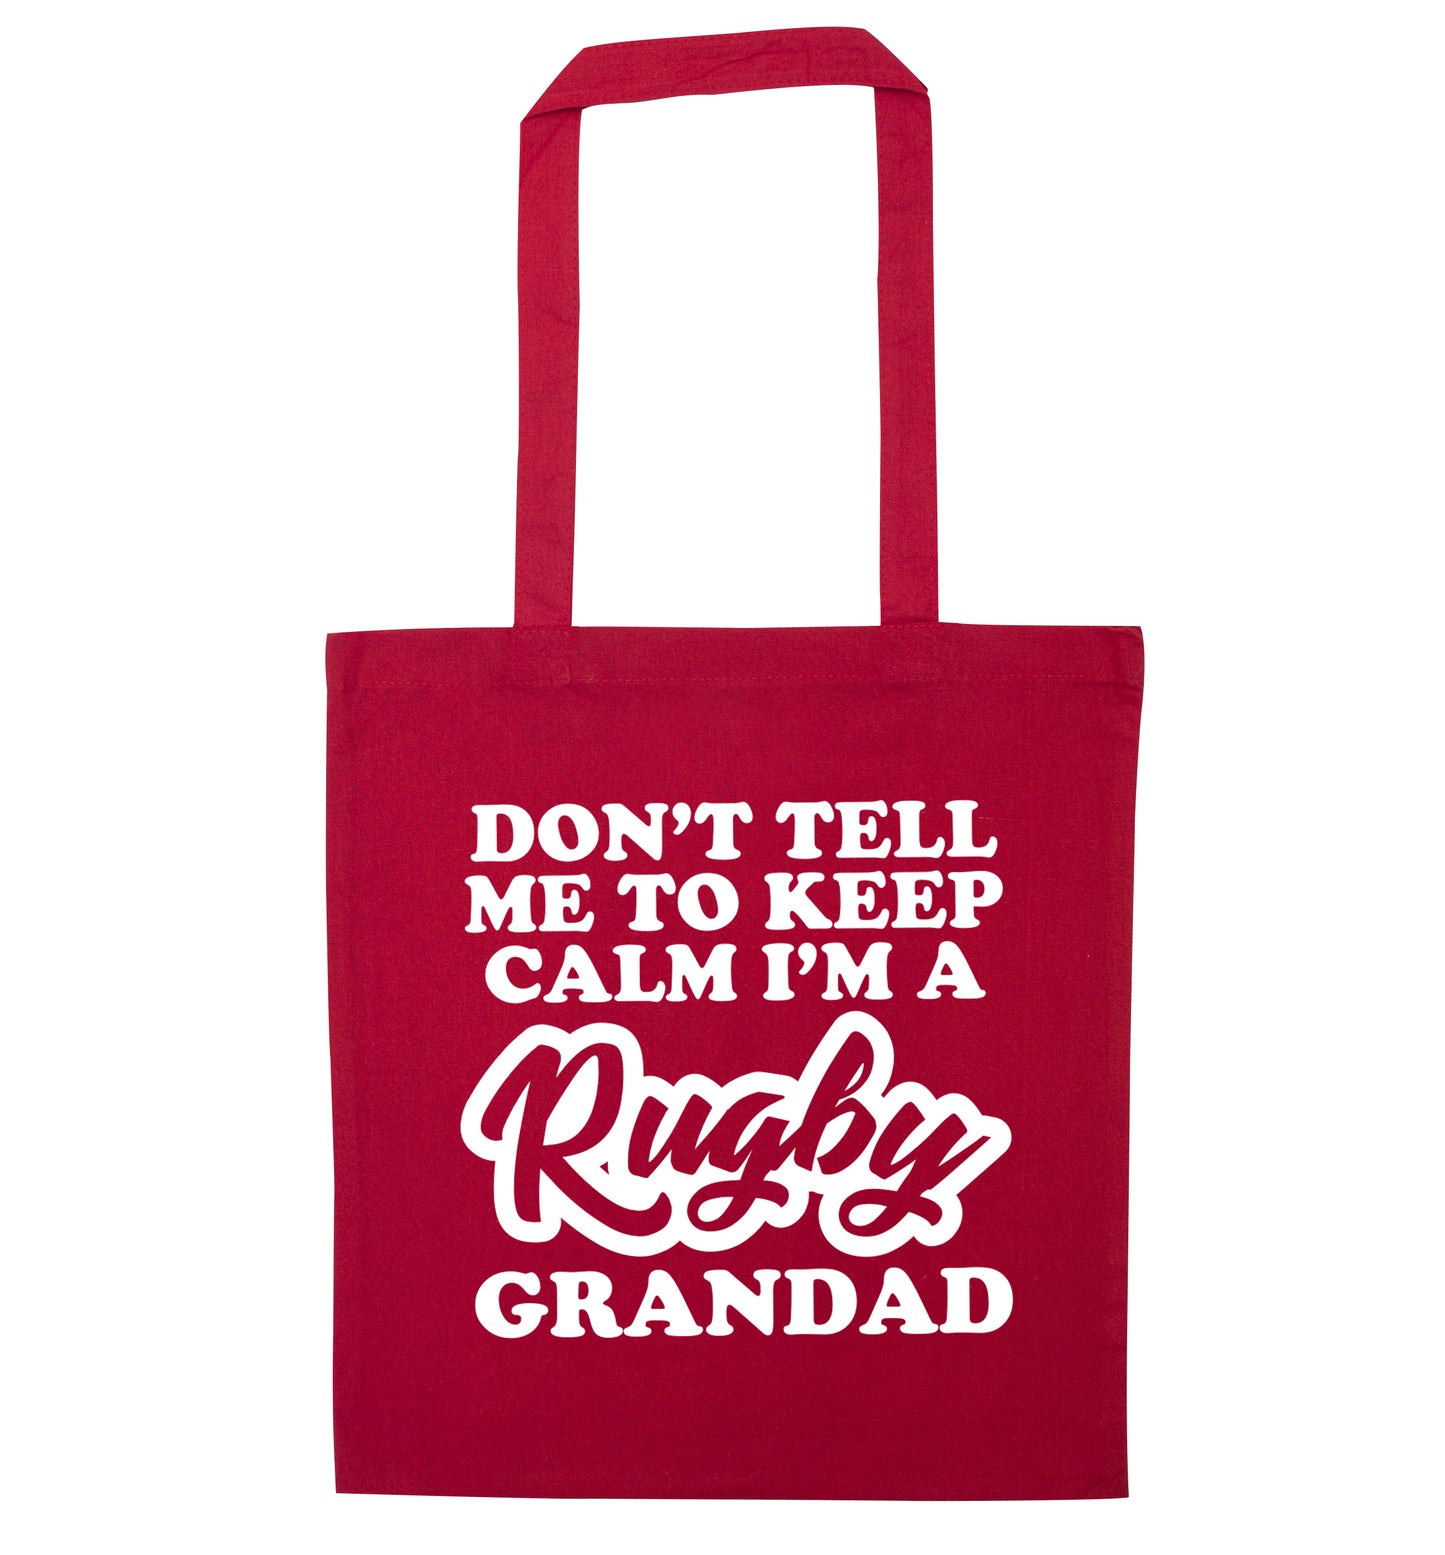 Don't tell me to keep calm I'm a rugby dad red tote bag